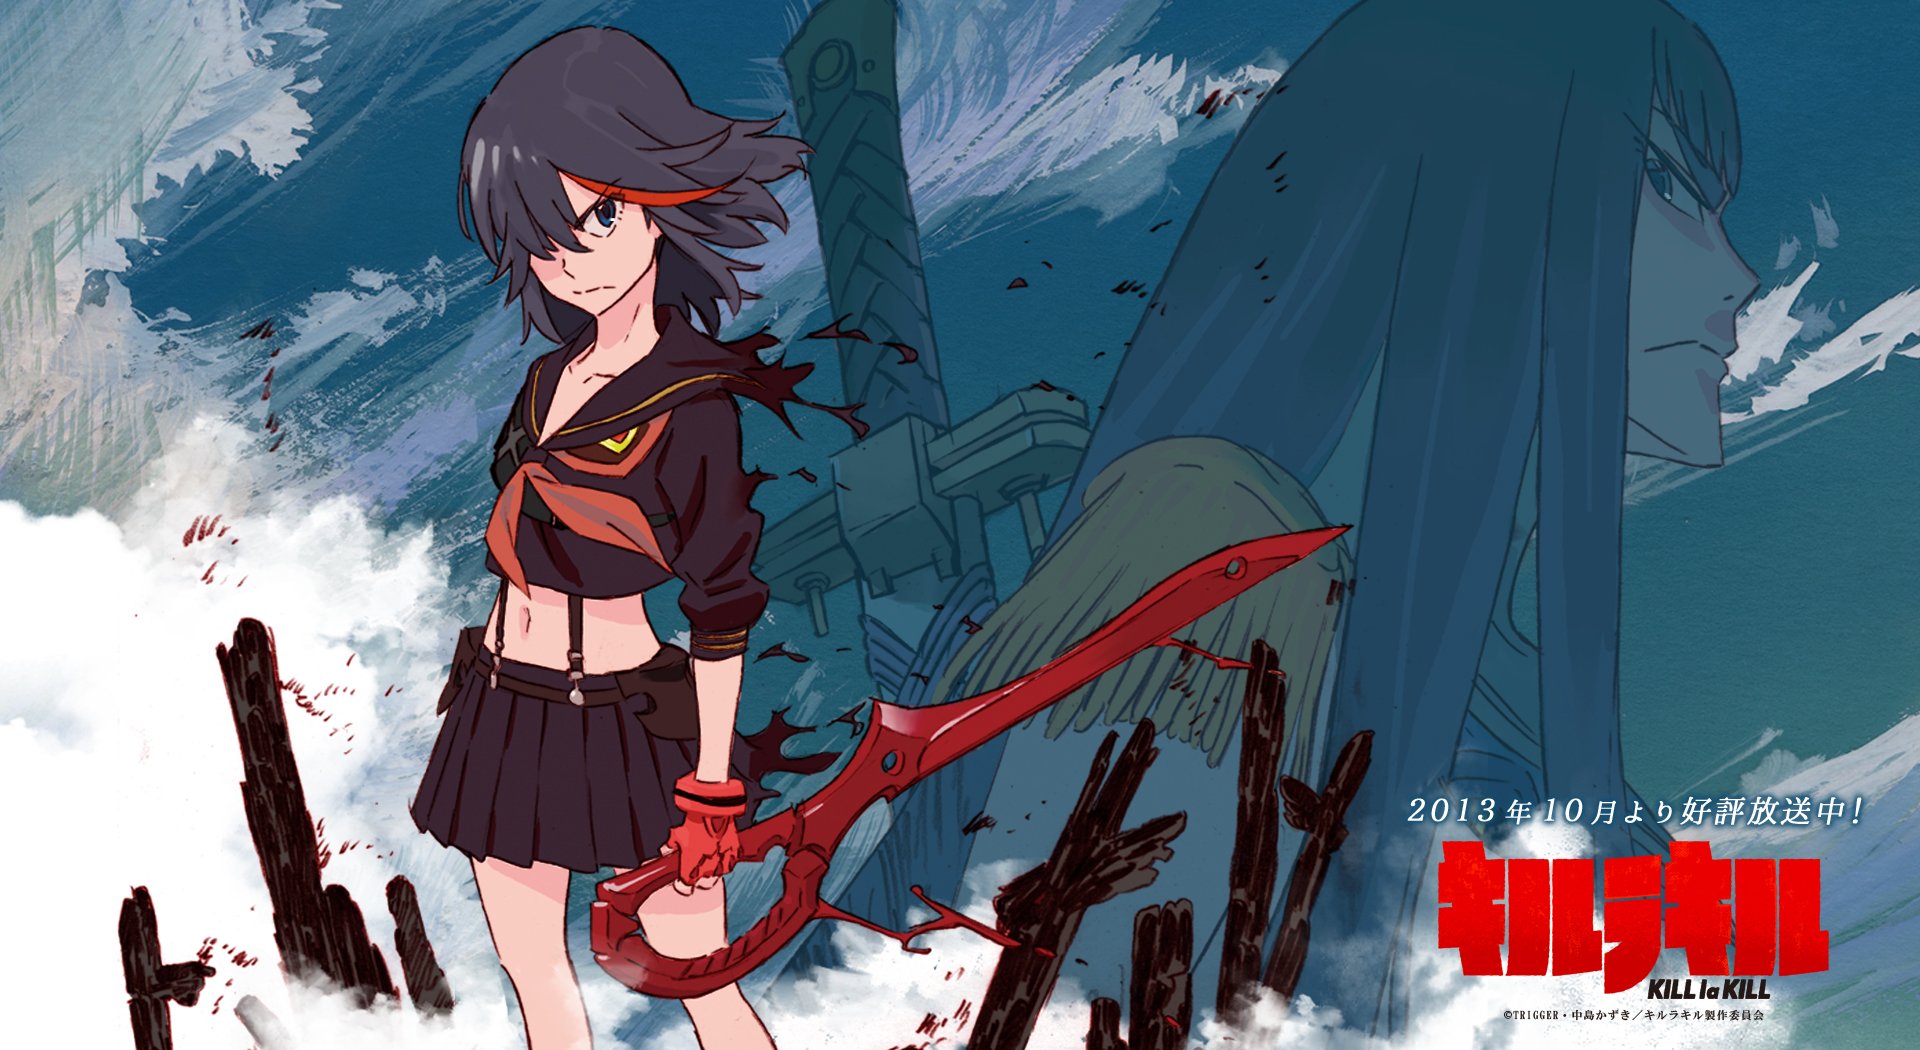 anime - kill la kill Wallpaper and Background Image | 1920x1050 | ID:459838